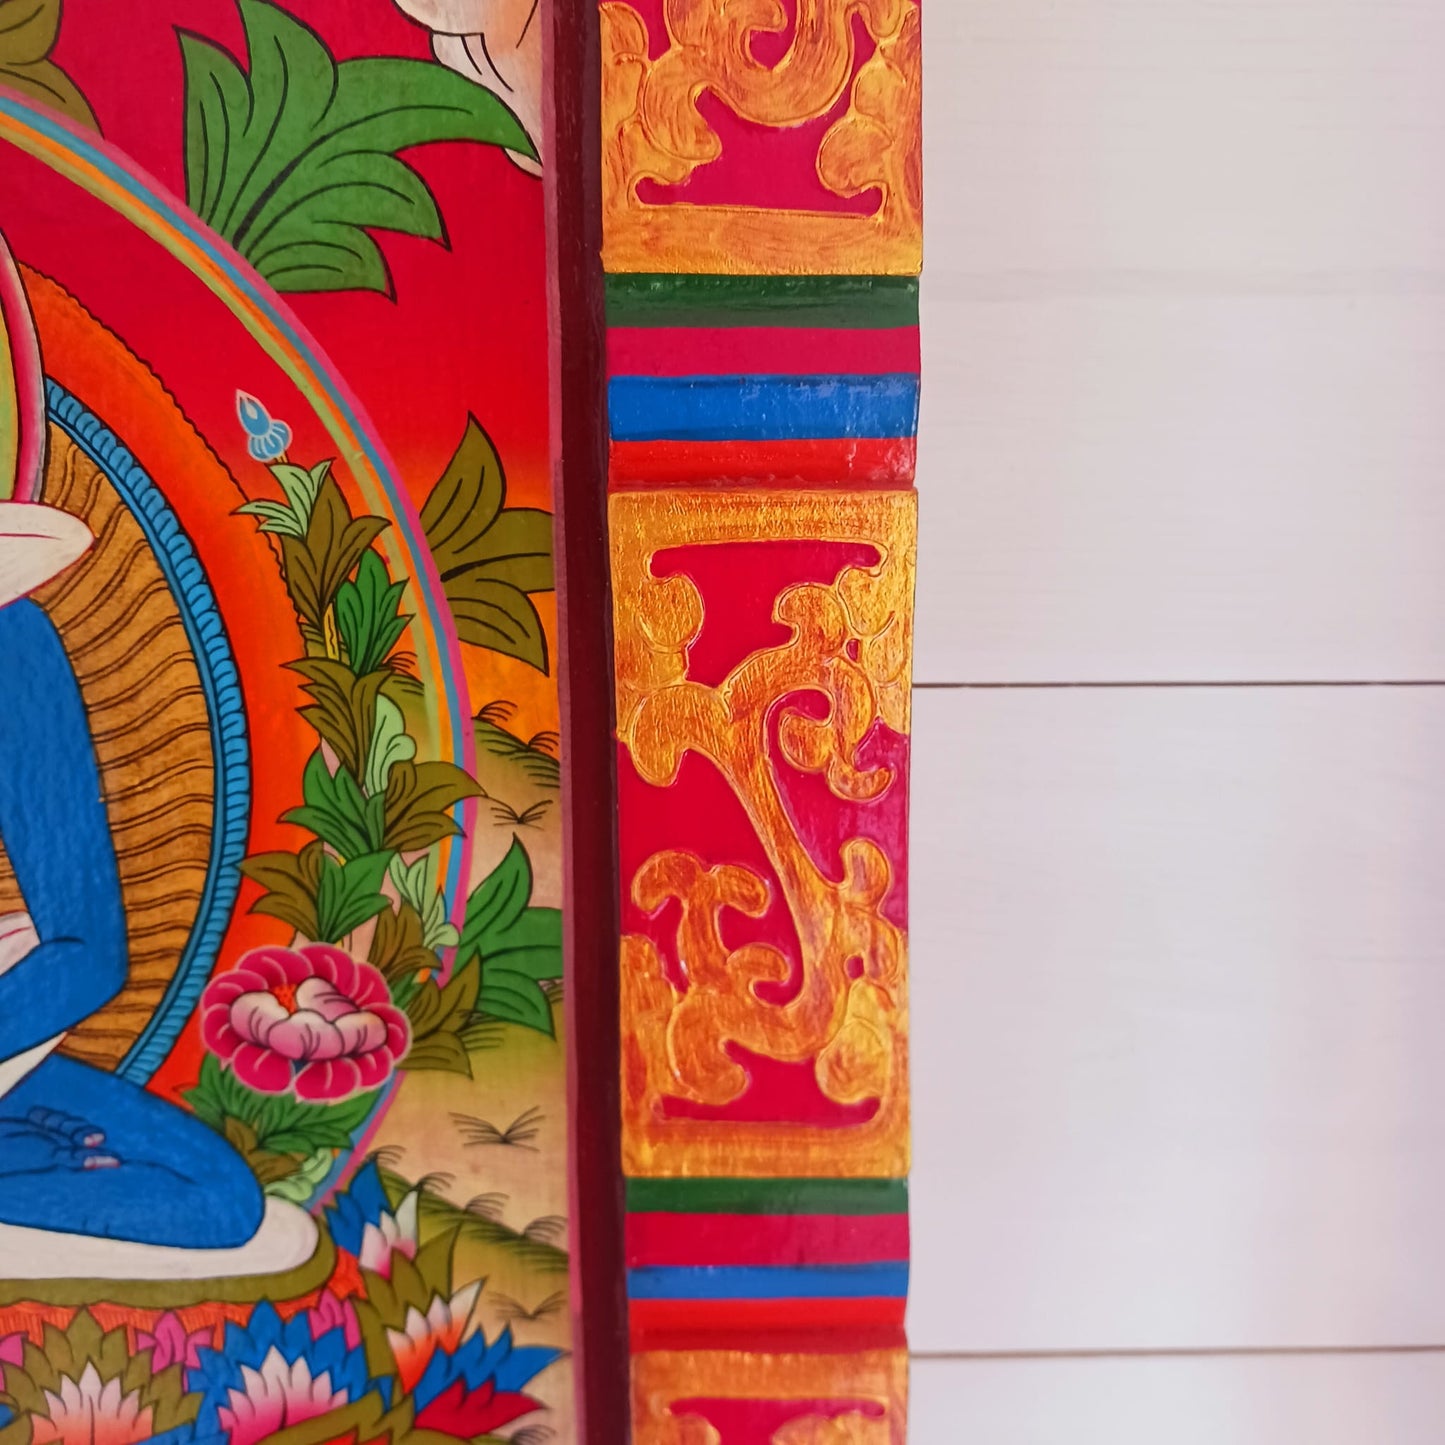 Tibetan Yab Yum Painting | Wooden Wall Hanging 41cm x 30cm x 2.5cm